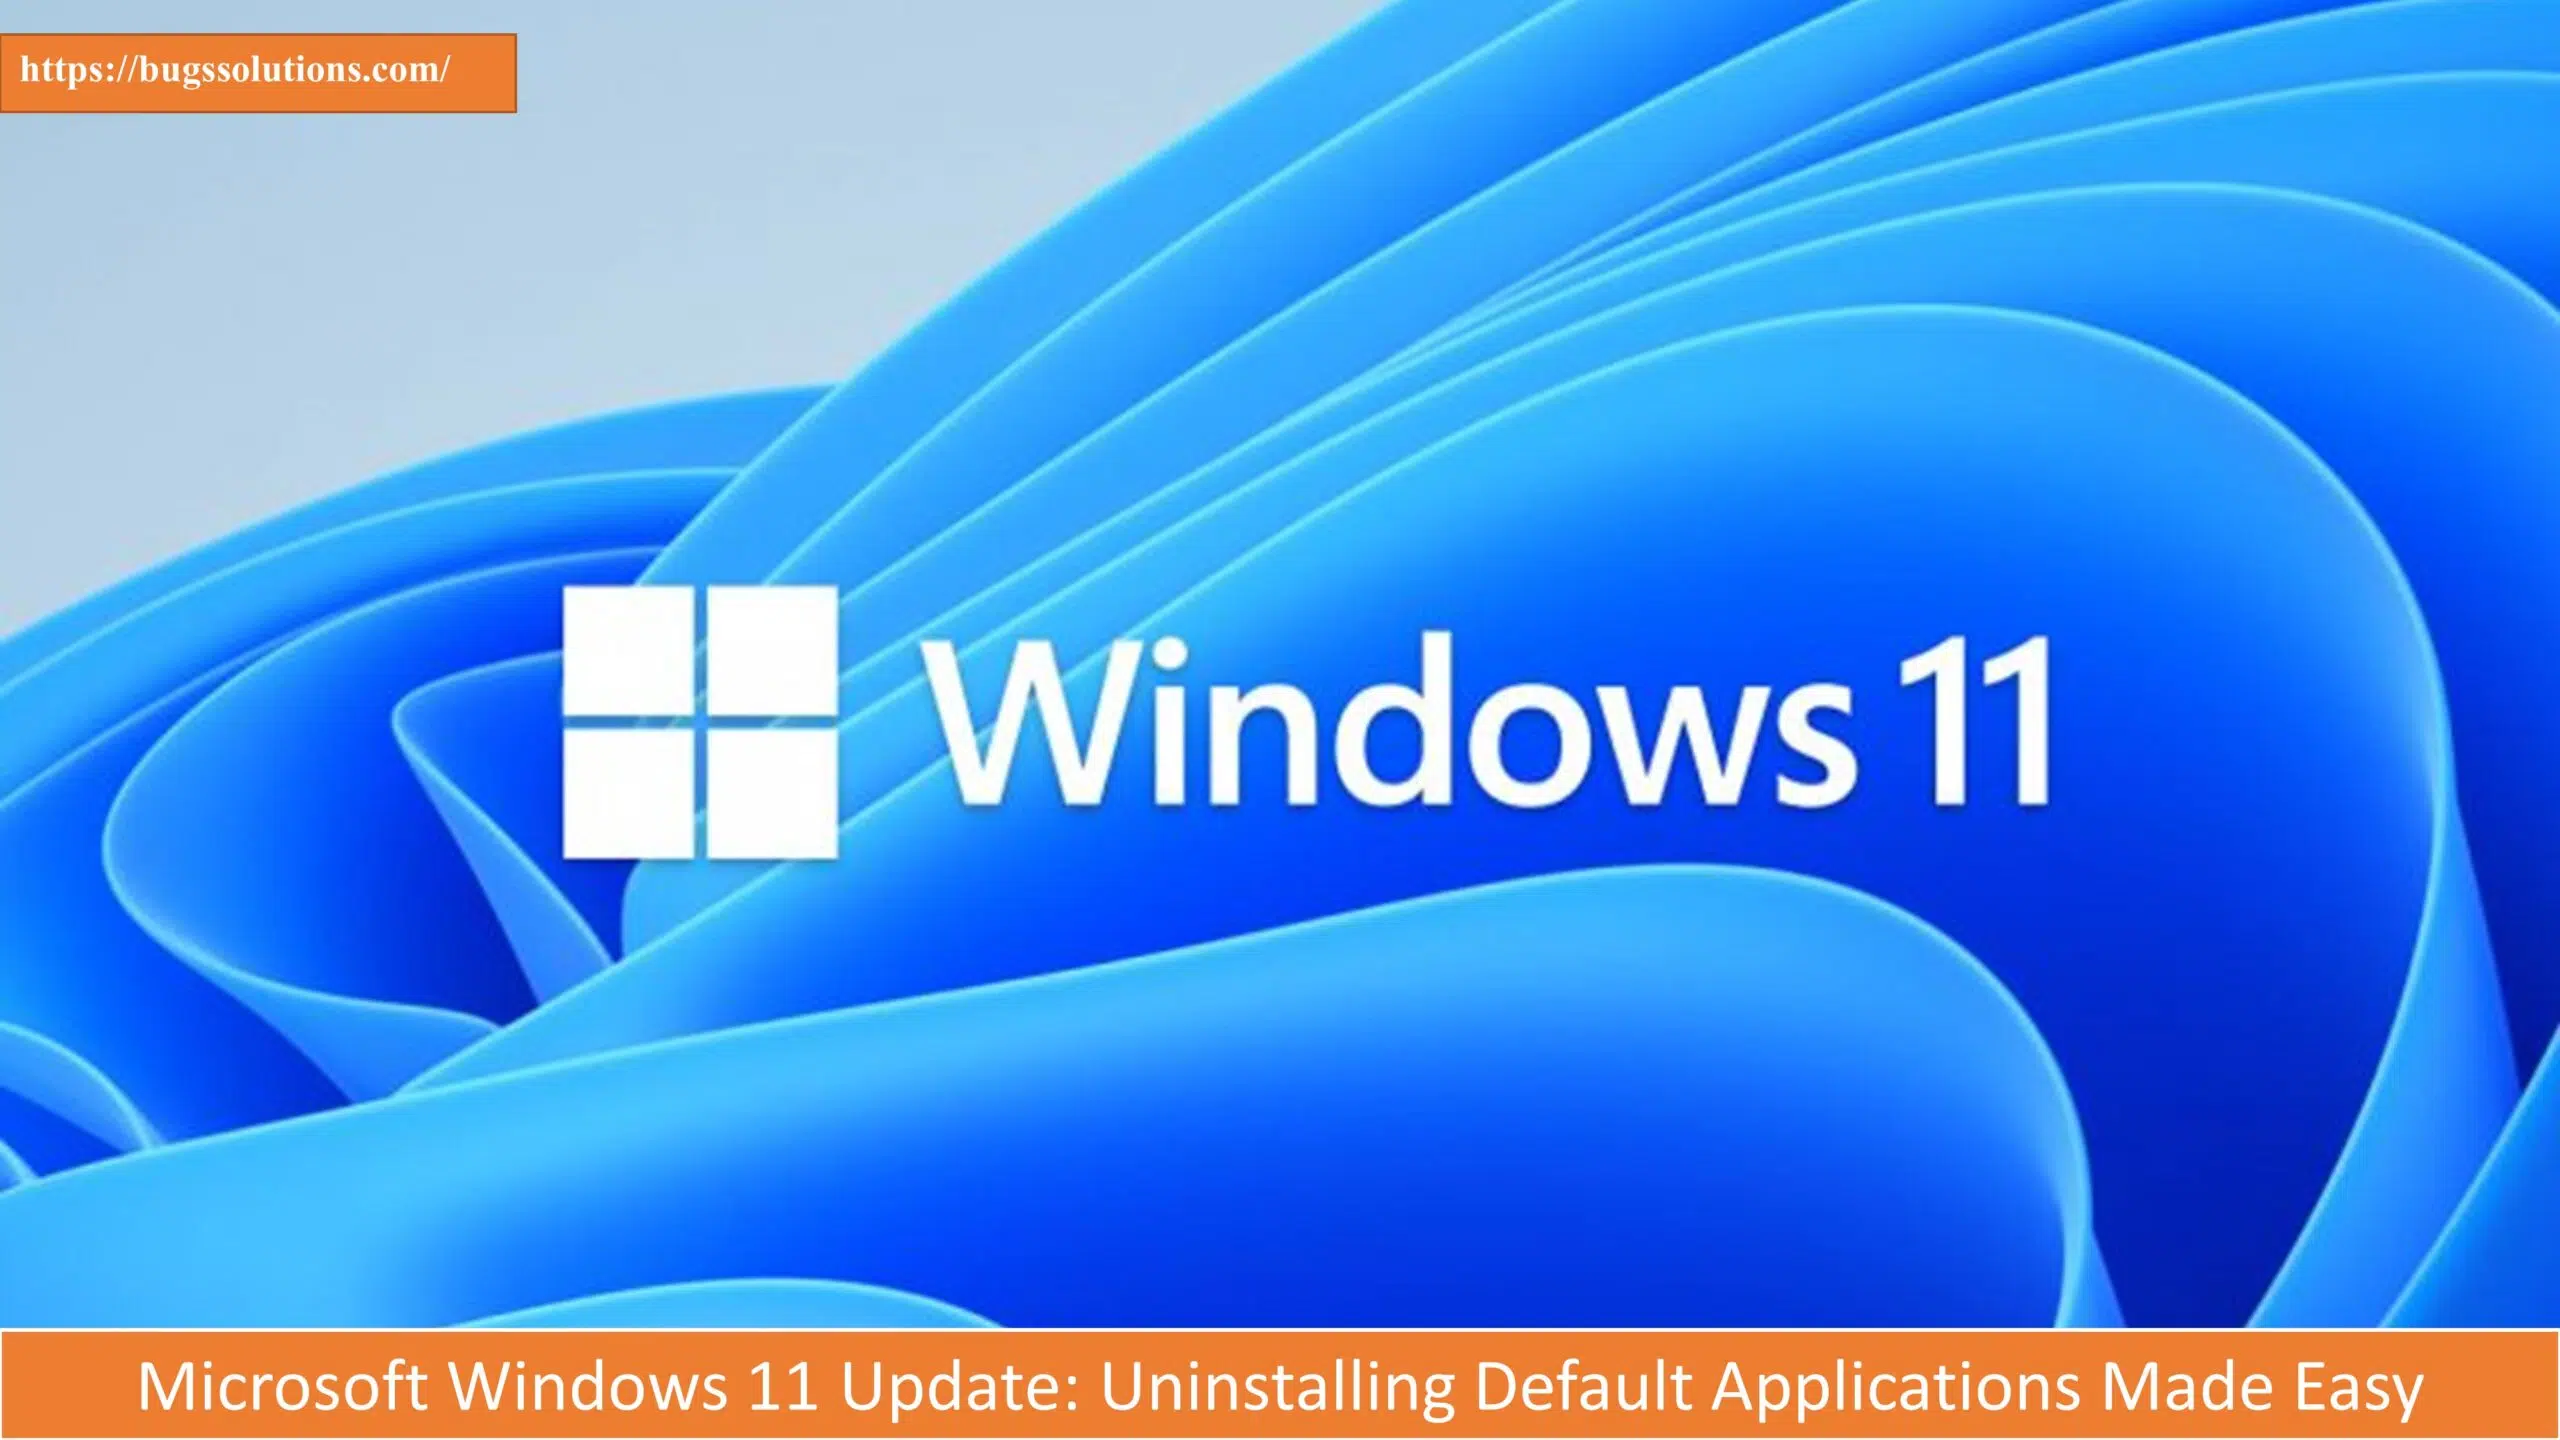 Microsoft Windows 11 Update: Uninstalling Default Applications Made Easy